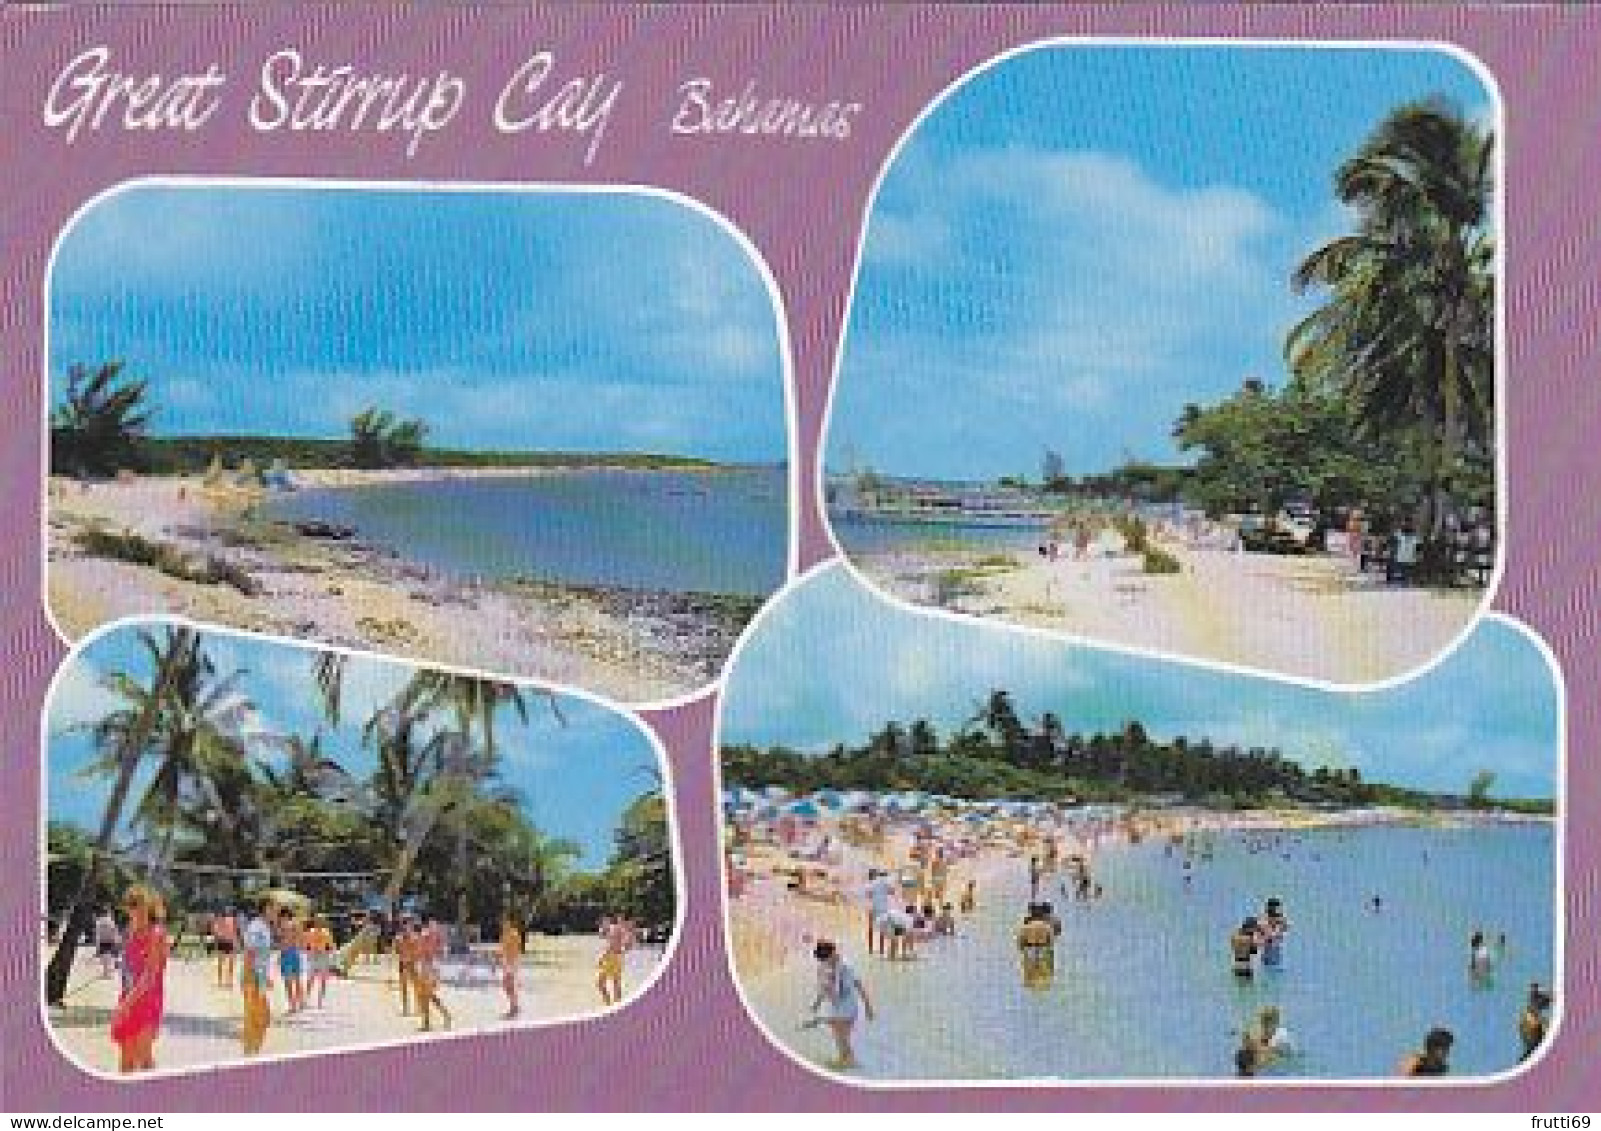 AK 210928 BAHAMAS - Great Sturrup Cay - Bahamas